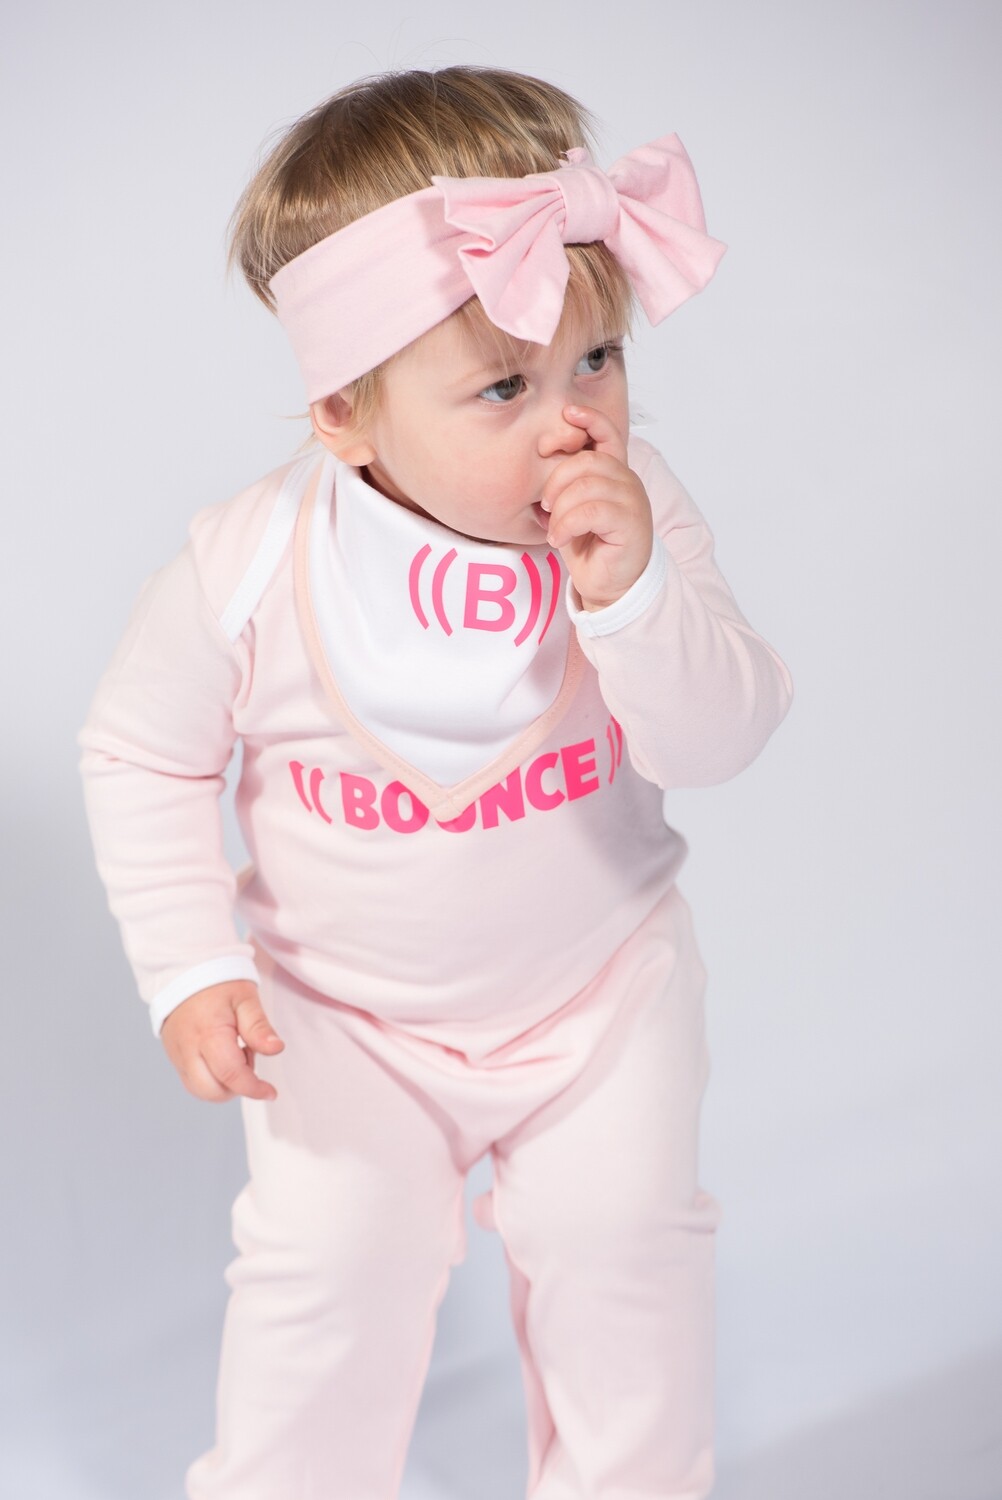 Baby Bib, Reversible Bandana - Pink & White